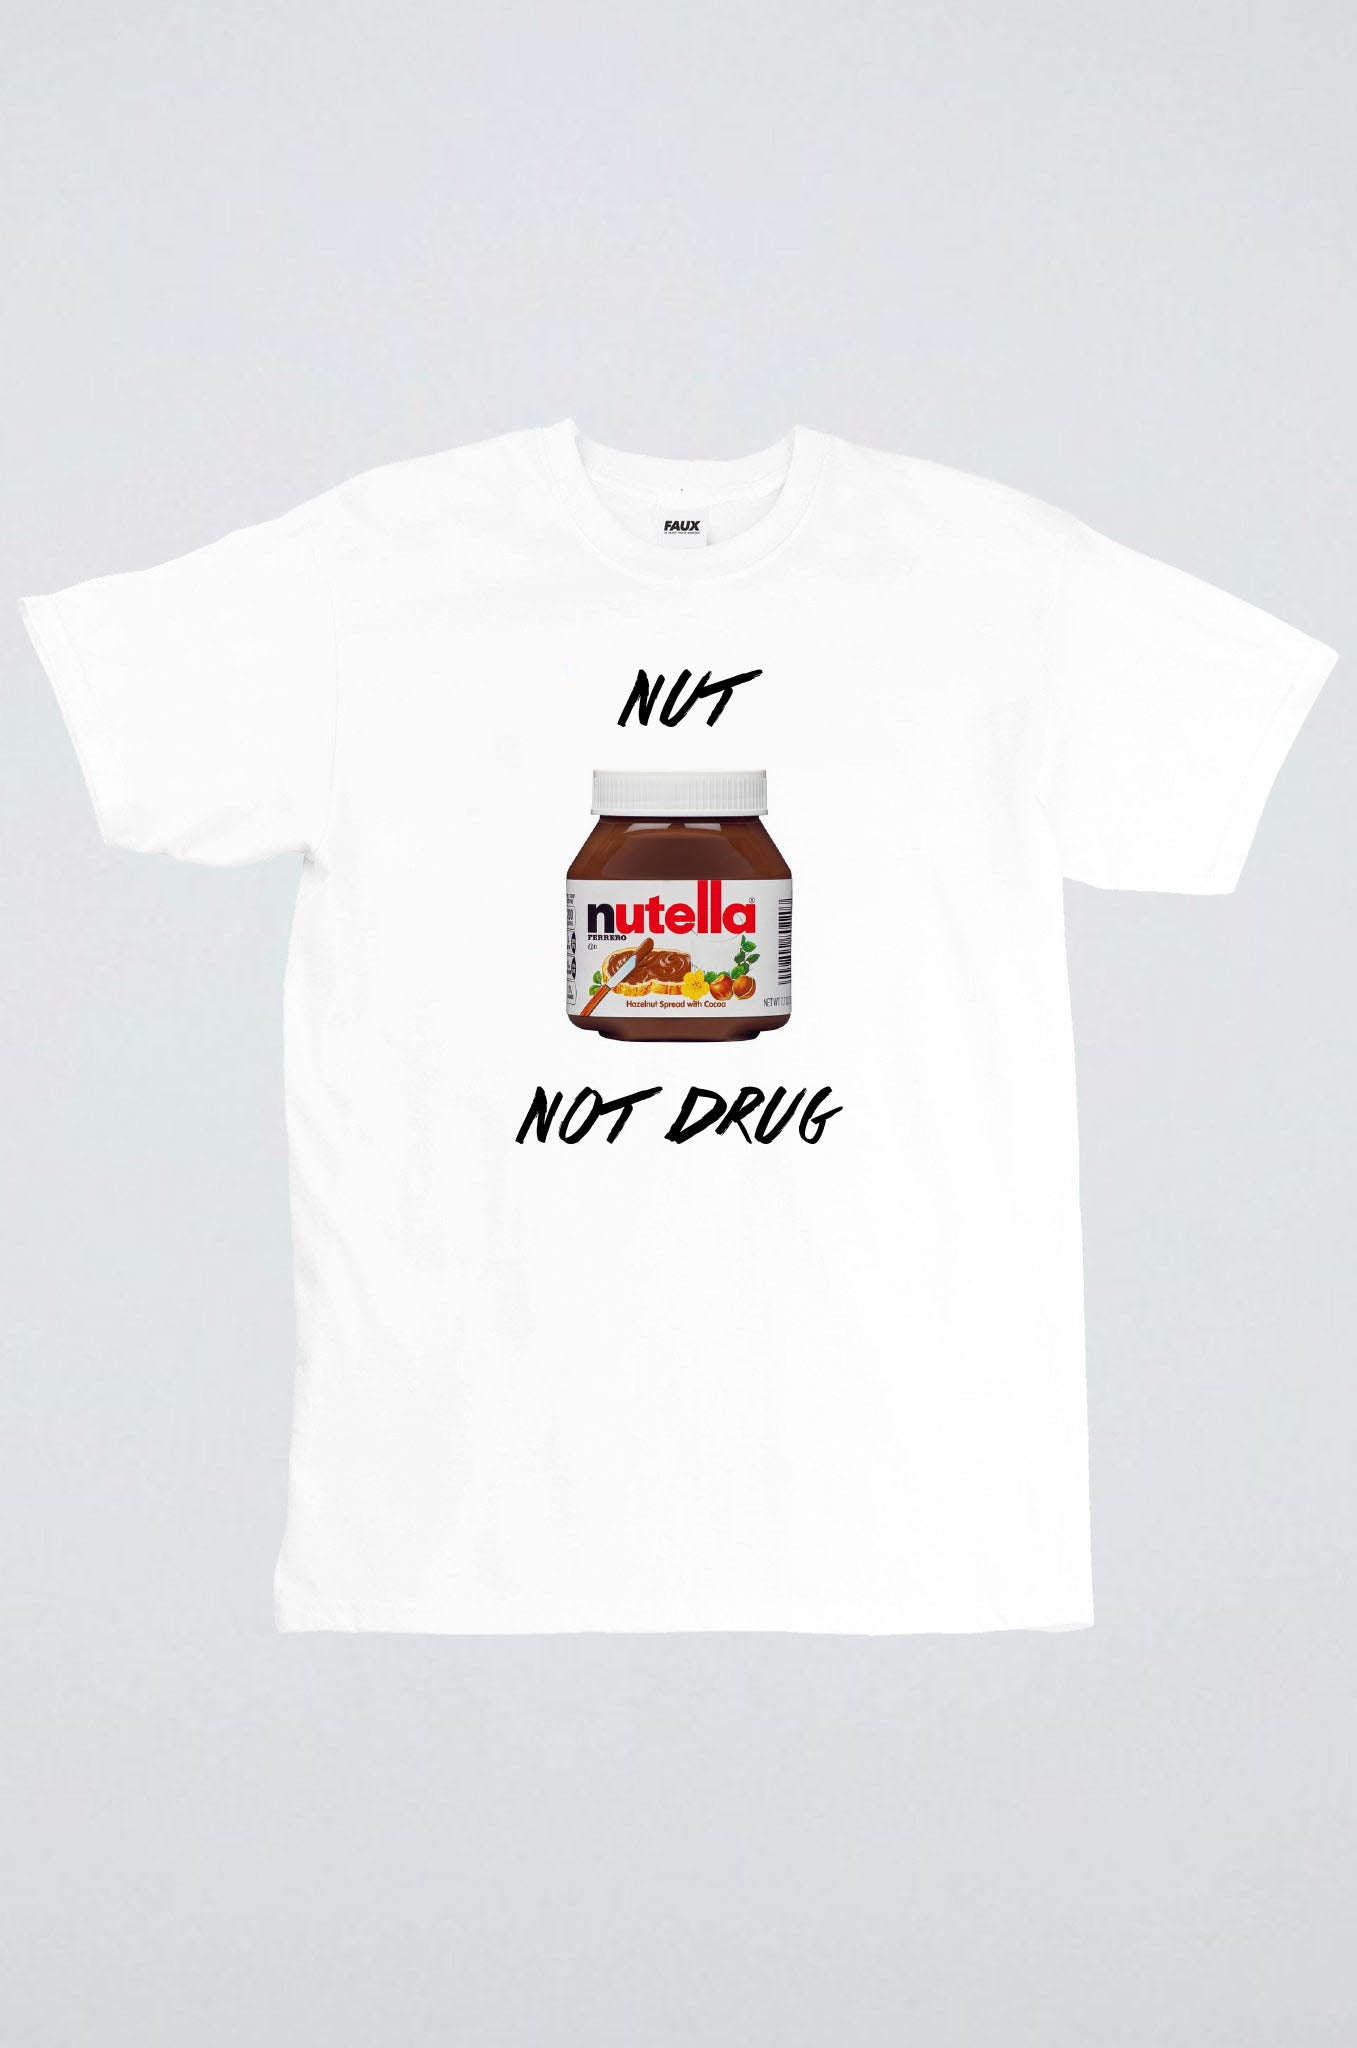 Nut not drug